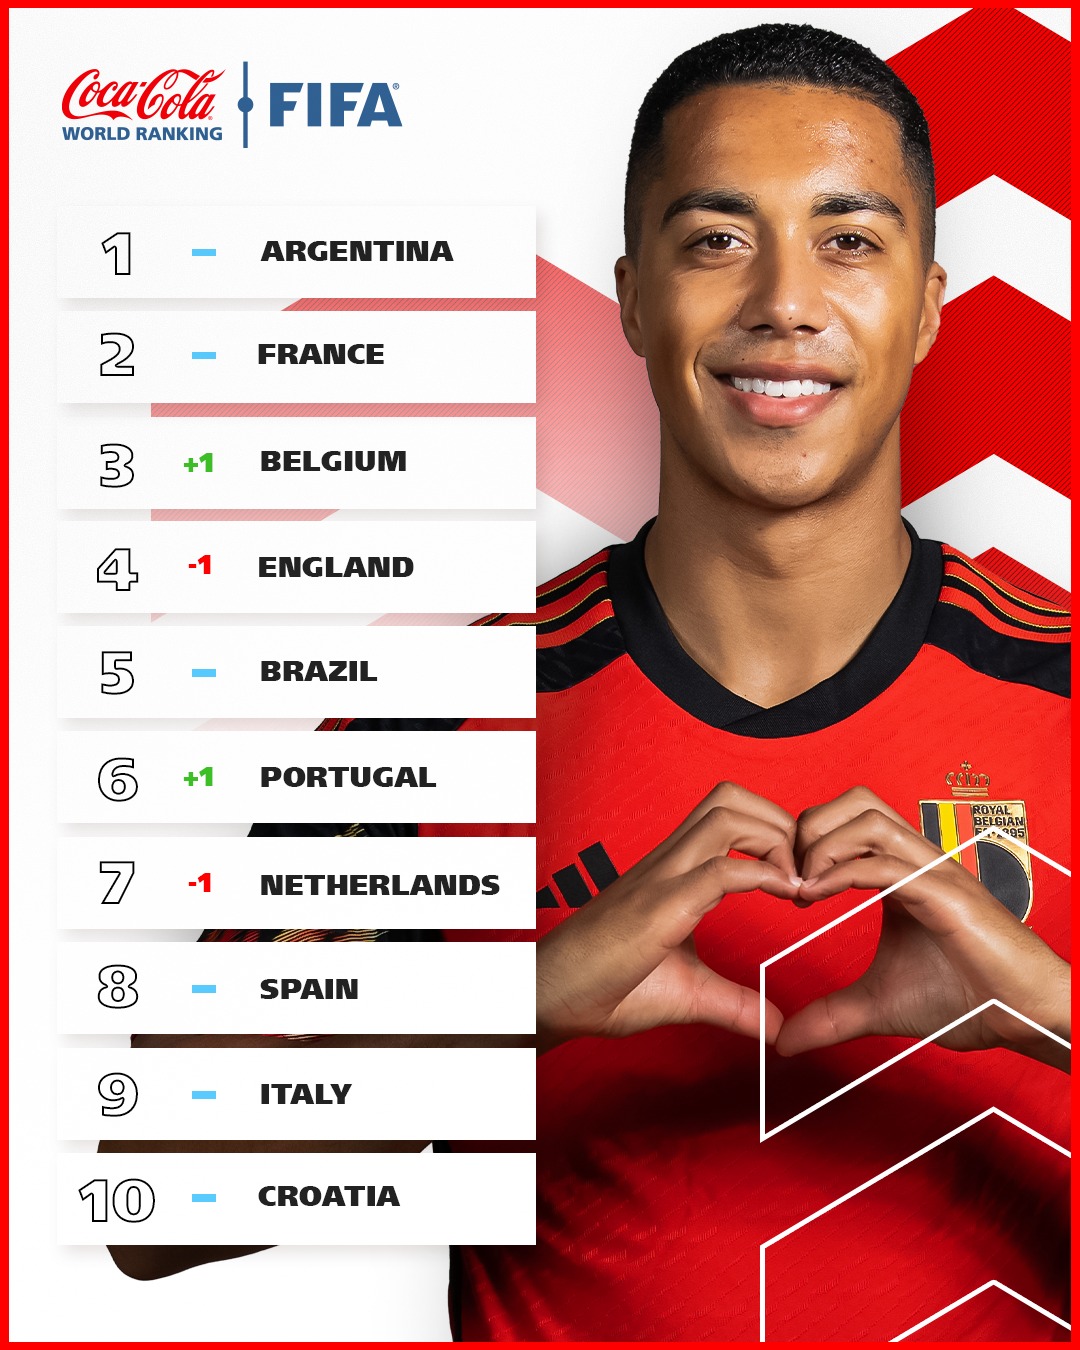 قد تكون صورة ‏‏‏شخص واحد‏، و‏‏لعب كرة القدم‏، و‏لعب كرة القدم‏‏‏ و‏تحتوي على النص '‏‎Coca-Cola WORLD RANKING FIFA ARGENTINA 2 FRANCE +1 3 BELGIUM -1 4 ENGLAND 5 BRAZIL +1 PORTUGAL 7 -1 NETHERLANDS ROYAL SPAIN ITALY 10 CROATIA‎‏'‏‏